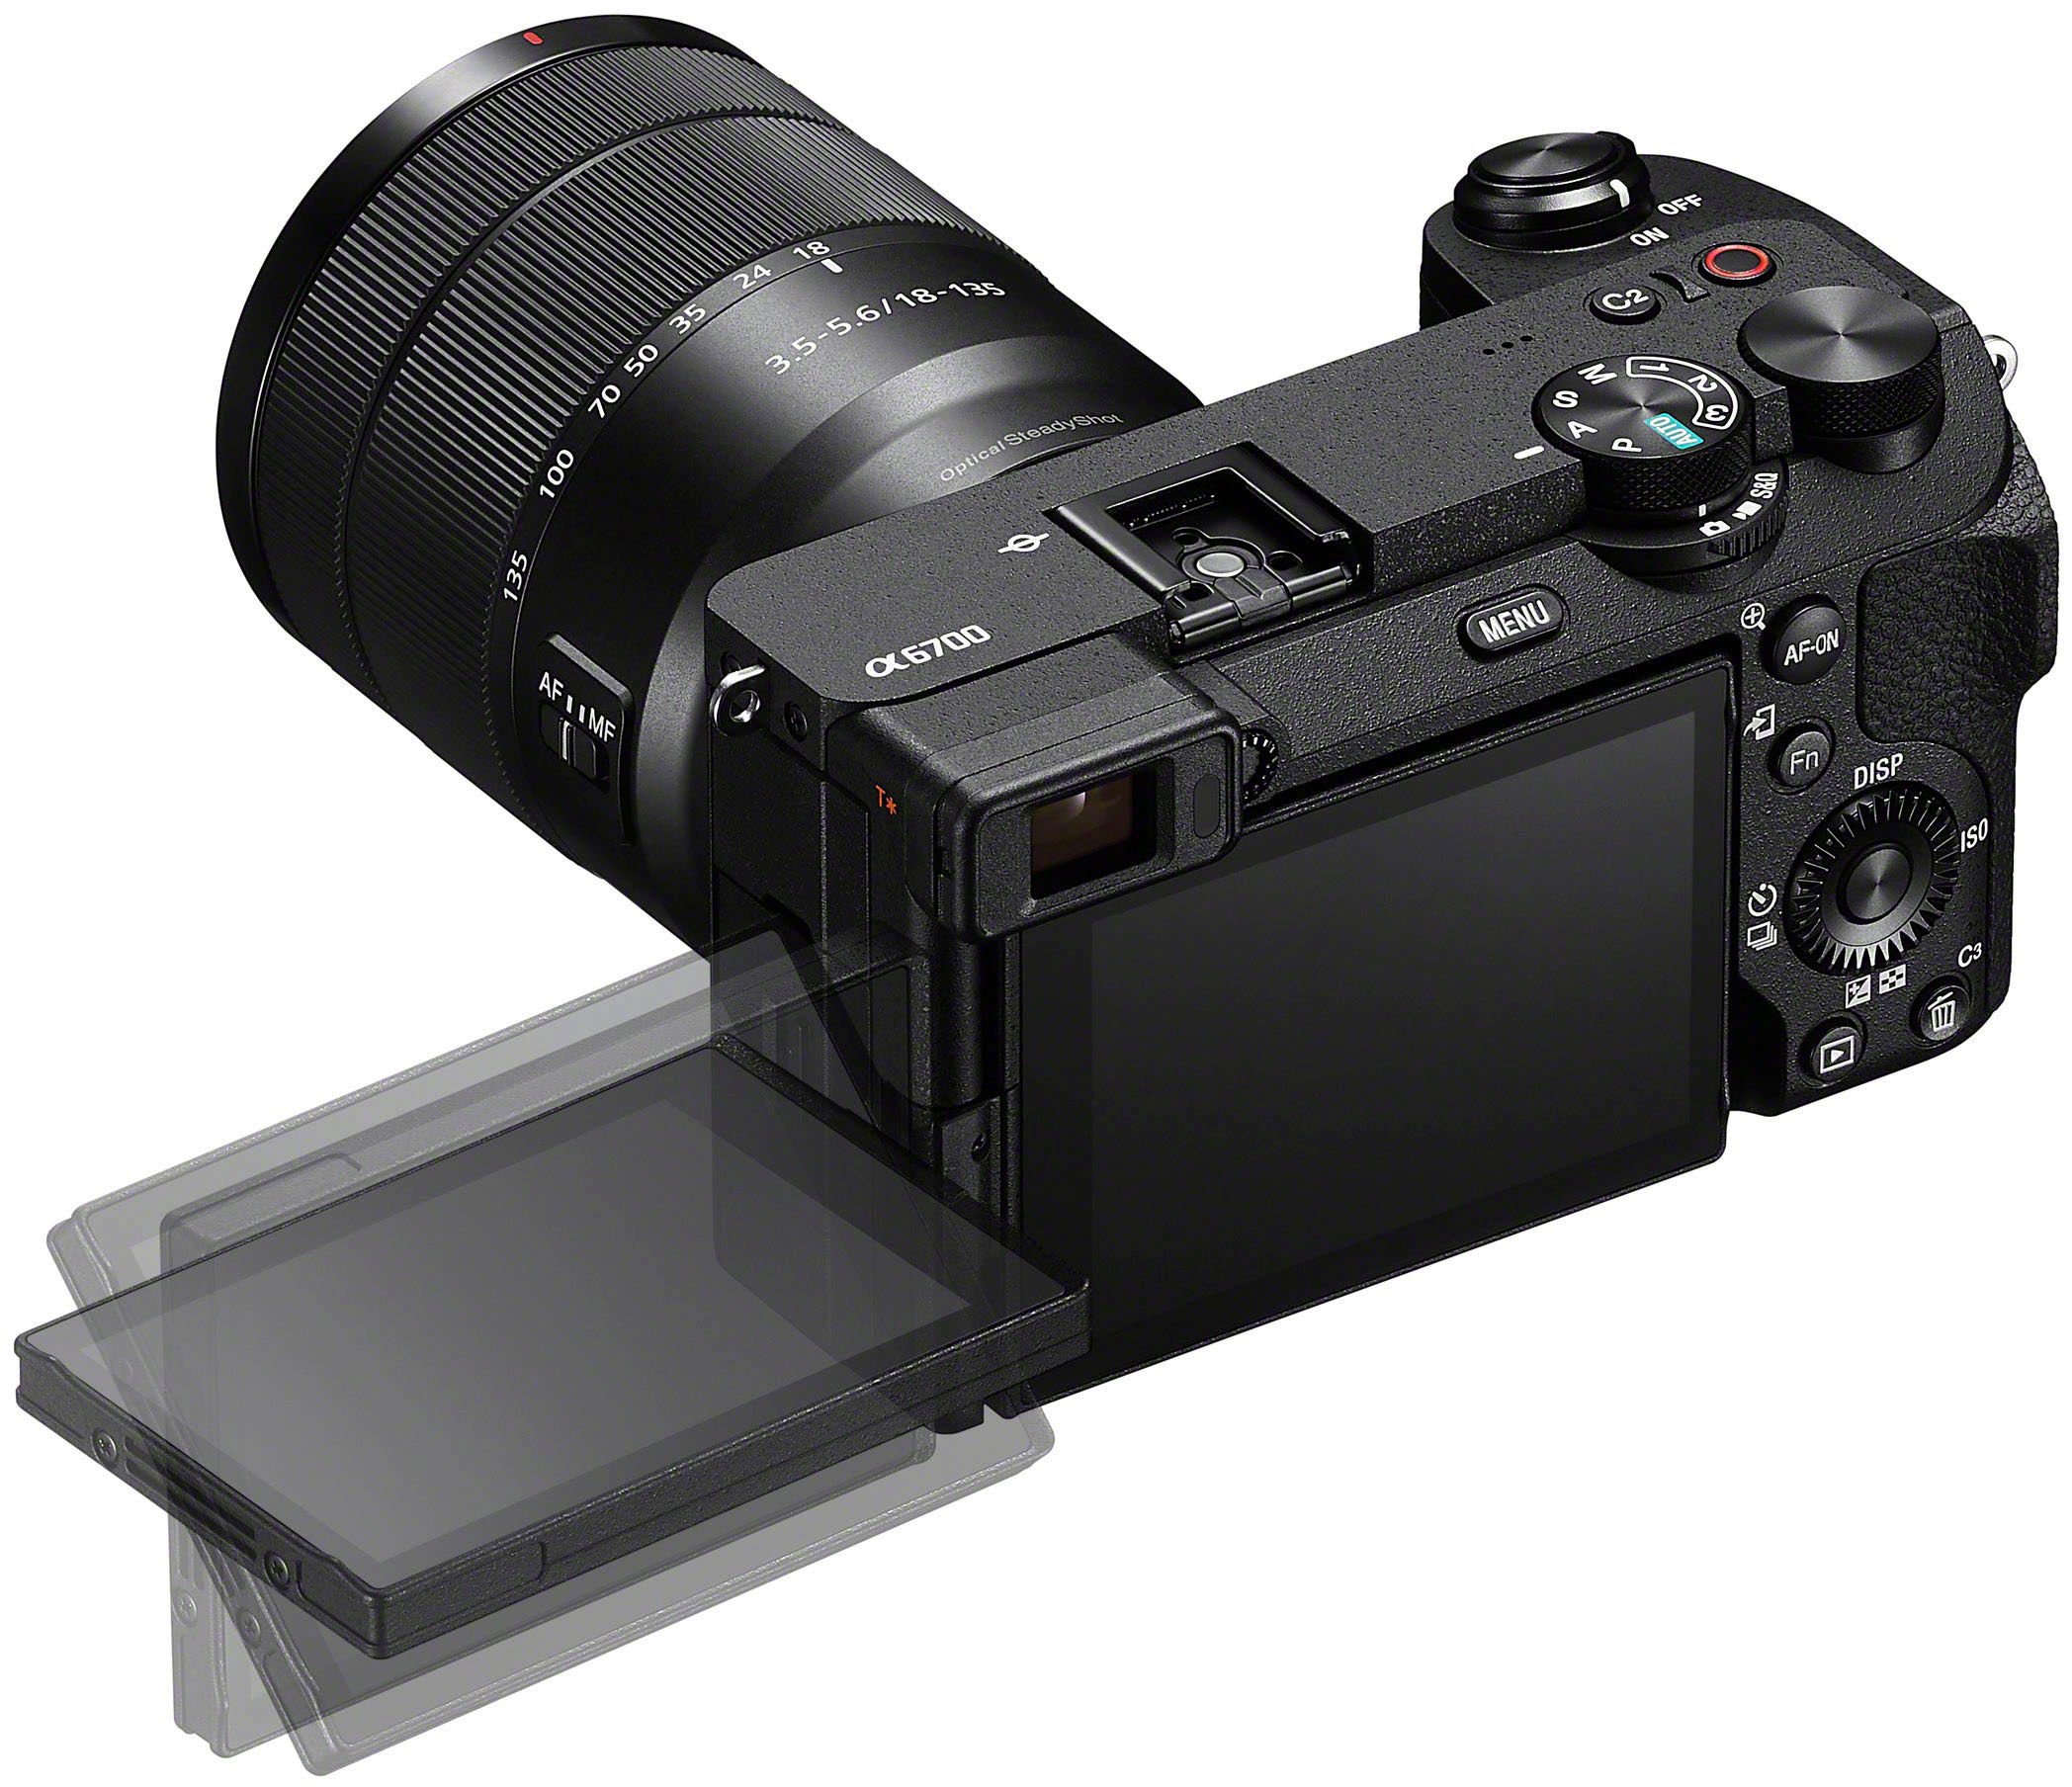 Sony announces AI-enhanced α6700 mirrorless camera - Videomaker